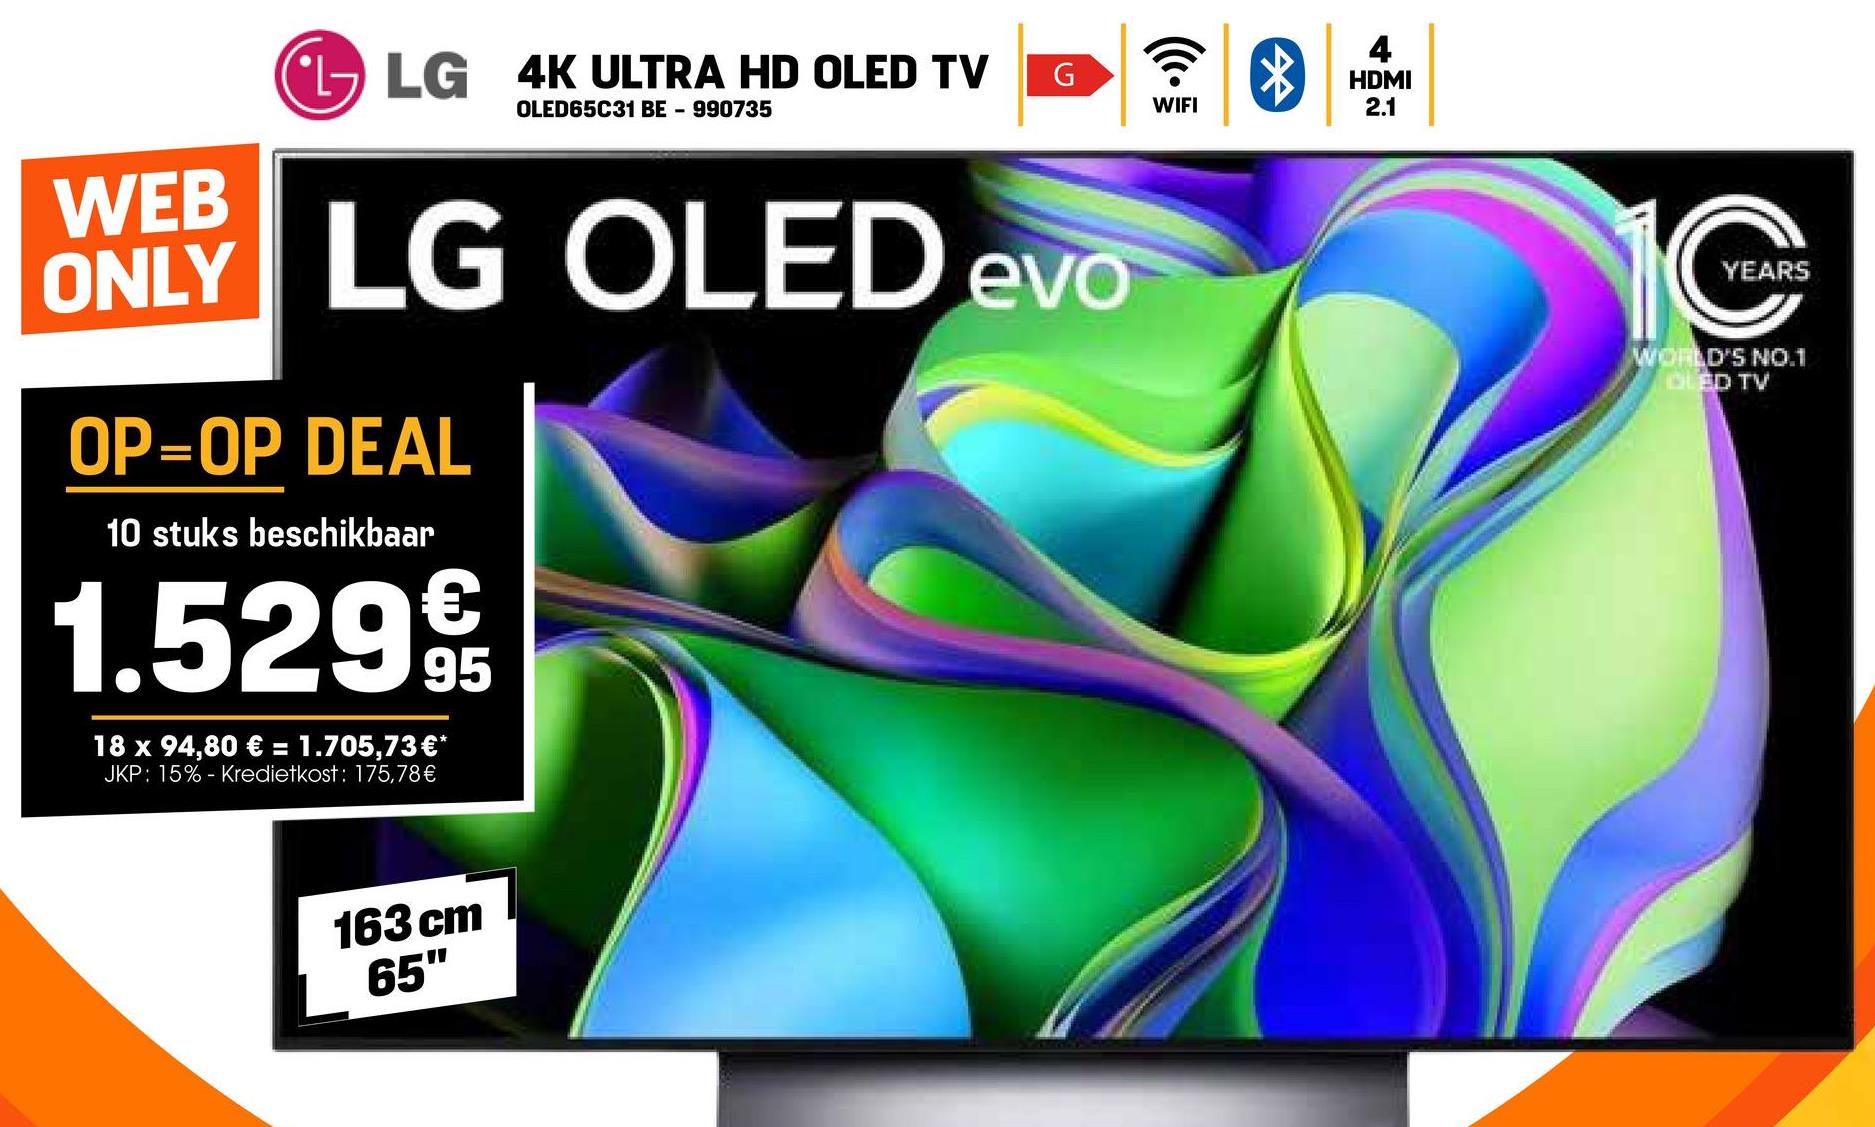 LG 4K ULTRA HD OLED TV G
OLED65C31 BE - 990735
WEB
ONLY LG OLED evo
OP=OP DEAL
10 stuks beschikbaar
1.529€/
18 x 94,80 € = 1.705,73 €*
JKP: 15% - Kredietkost: 175,78 €
163 cm
65"
WIFI
HDMI
2.1
10
YEARS
WORLD'S NO.1
OLED TV